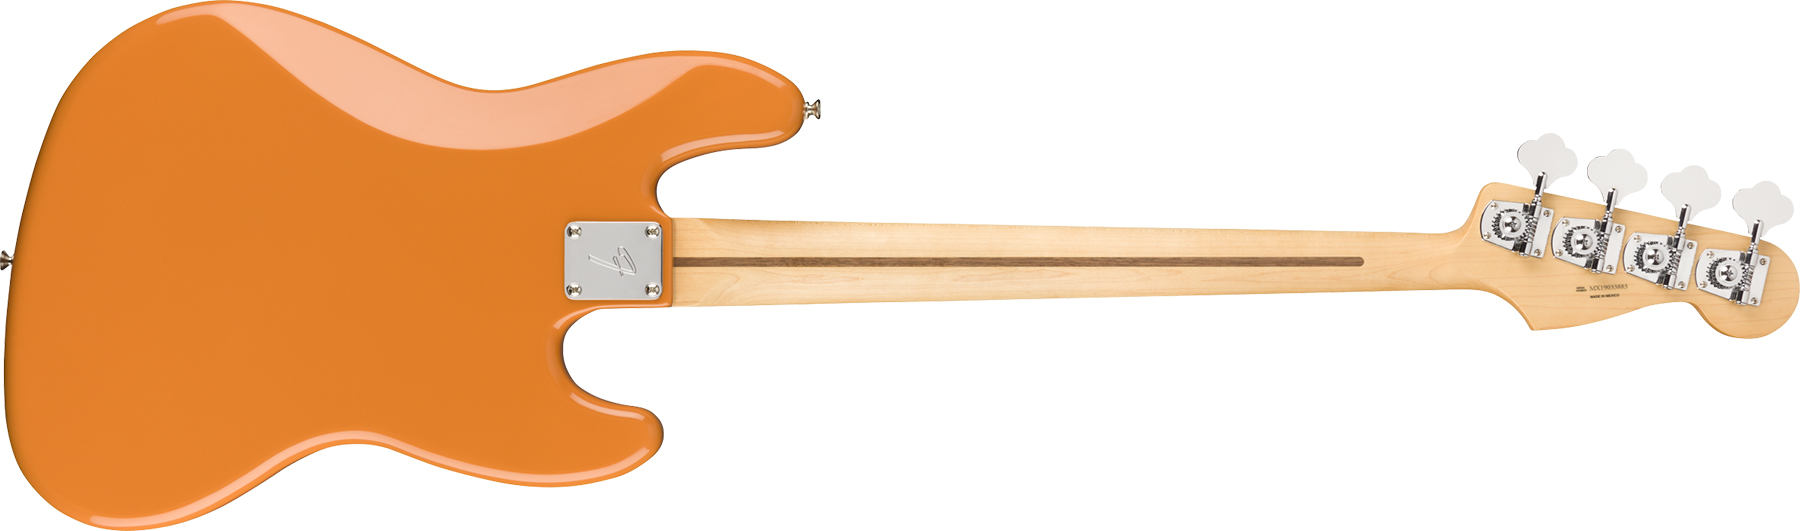 Fender Jazz Bass Player Lh Gaucher Mex Pf - Capri Orange - Basse Électrique Solid Body - Variation 1